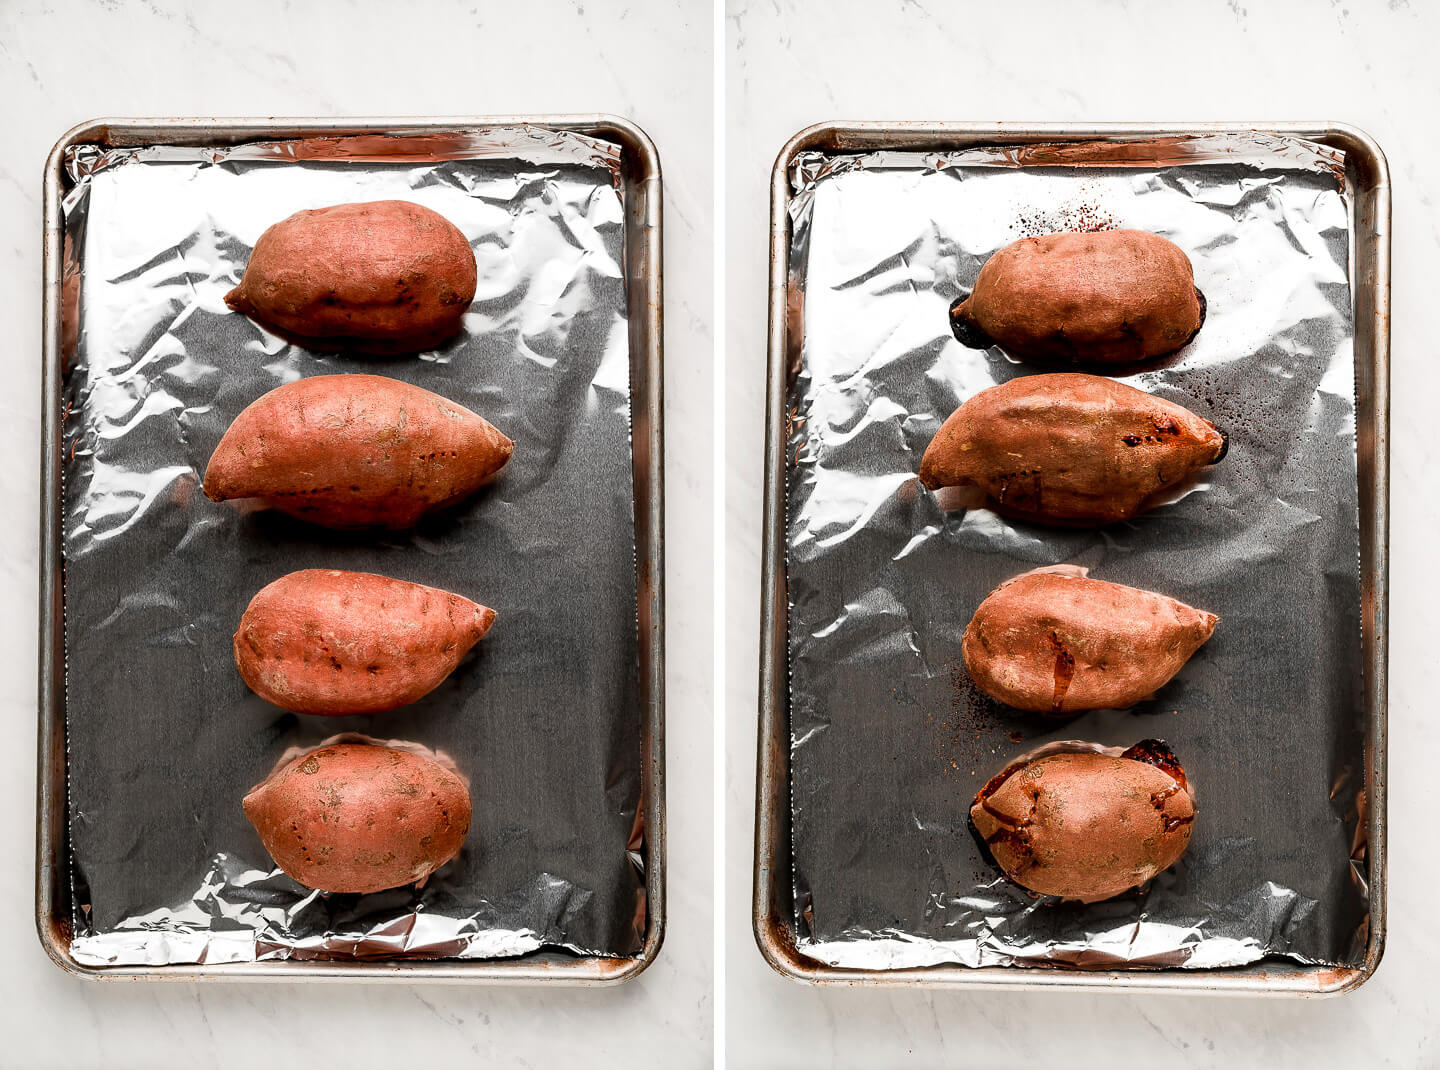 Diptych- 4 raw sweet potatoes on a baking sheet; sweet potatoes baked.